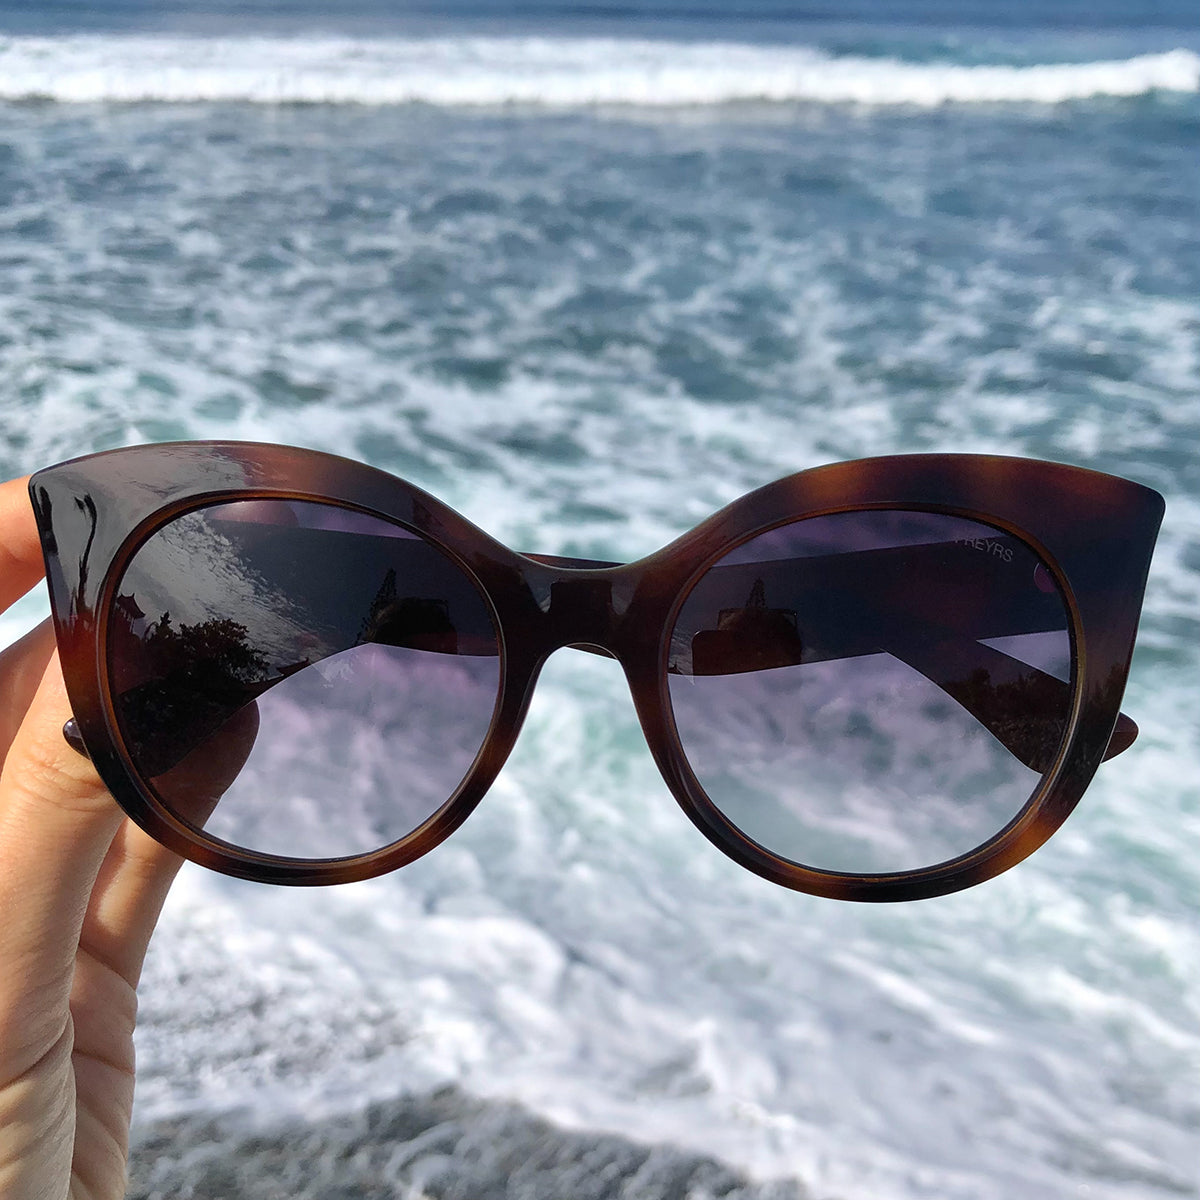 Roxy Sunglasses Lunettes De Soleil Coachella Erjey03056 Xmmm for sale  online